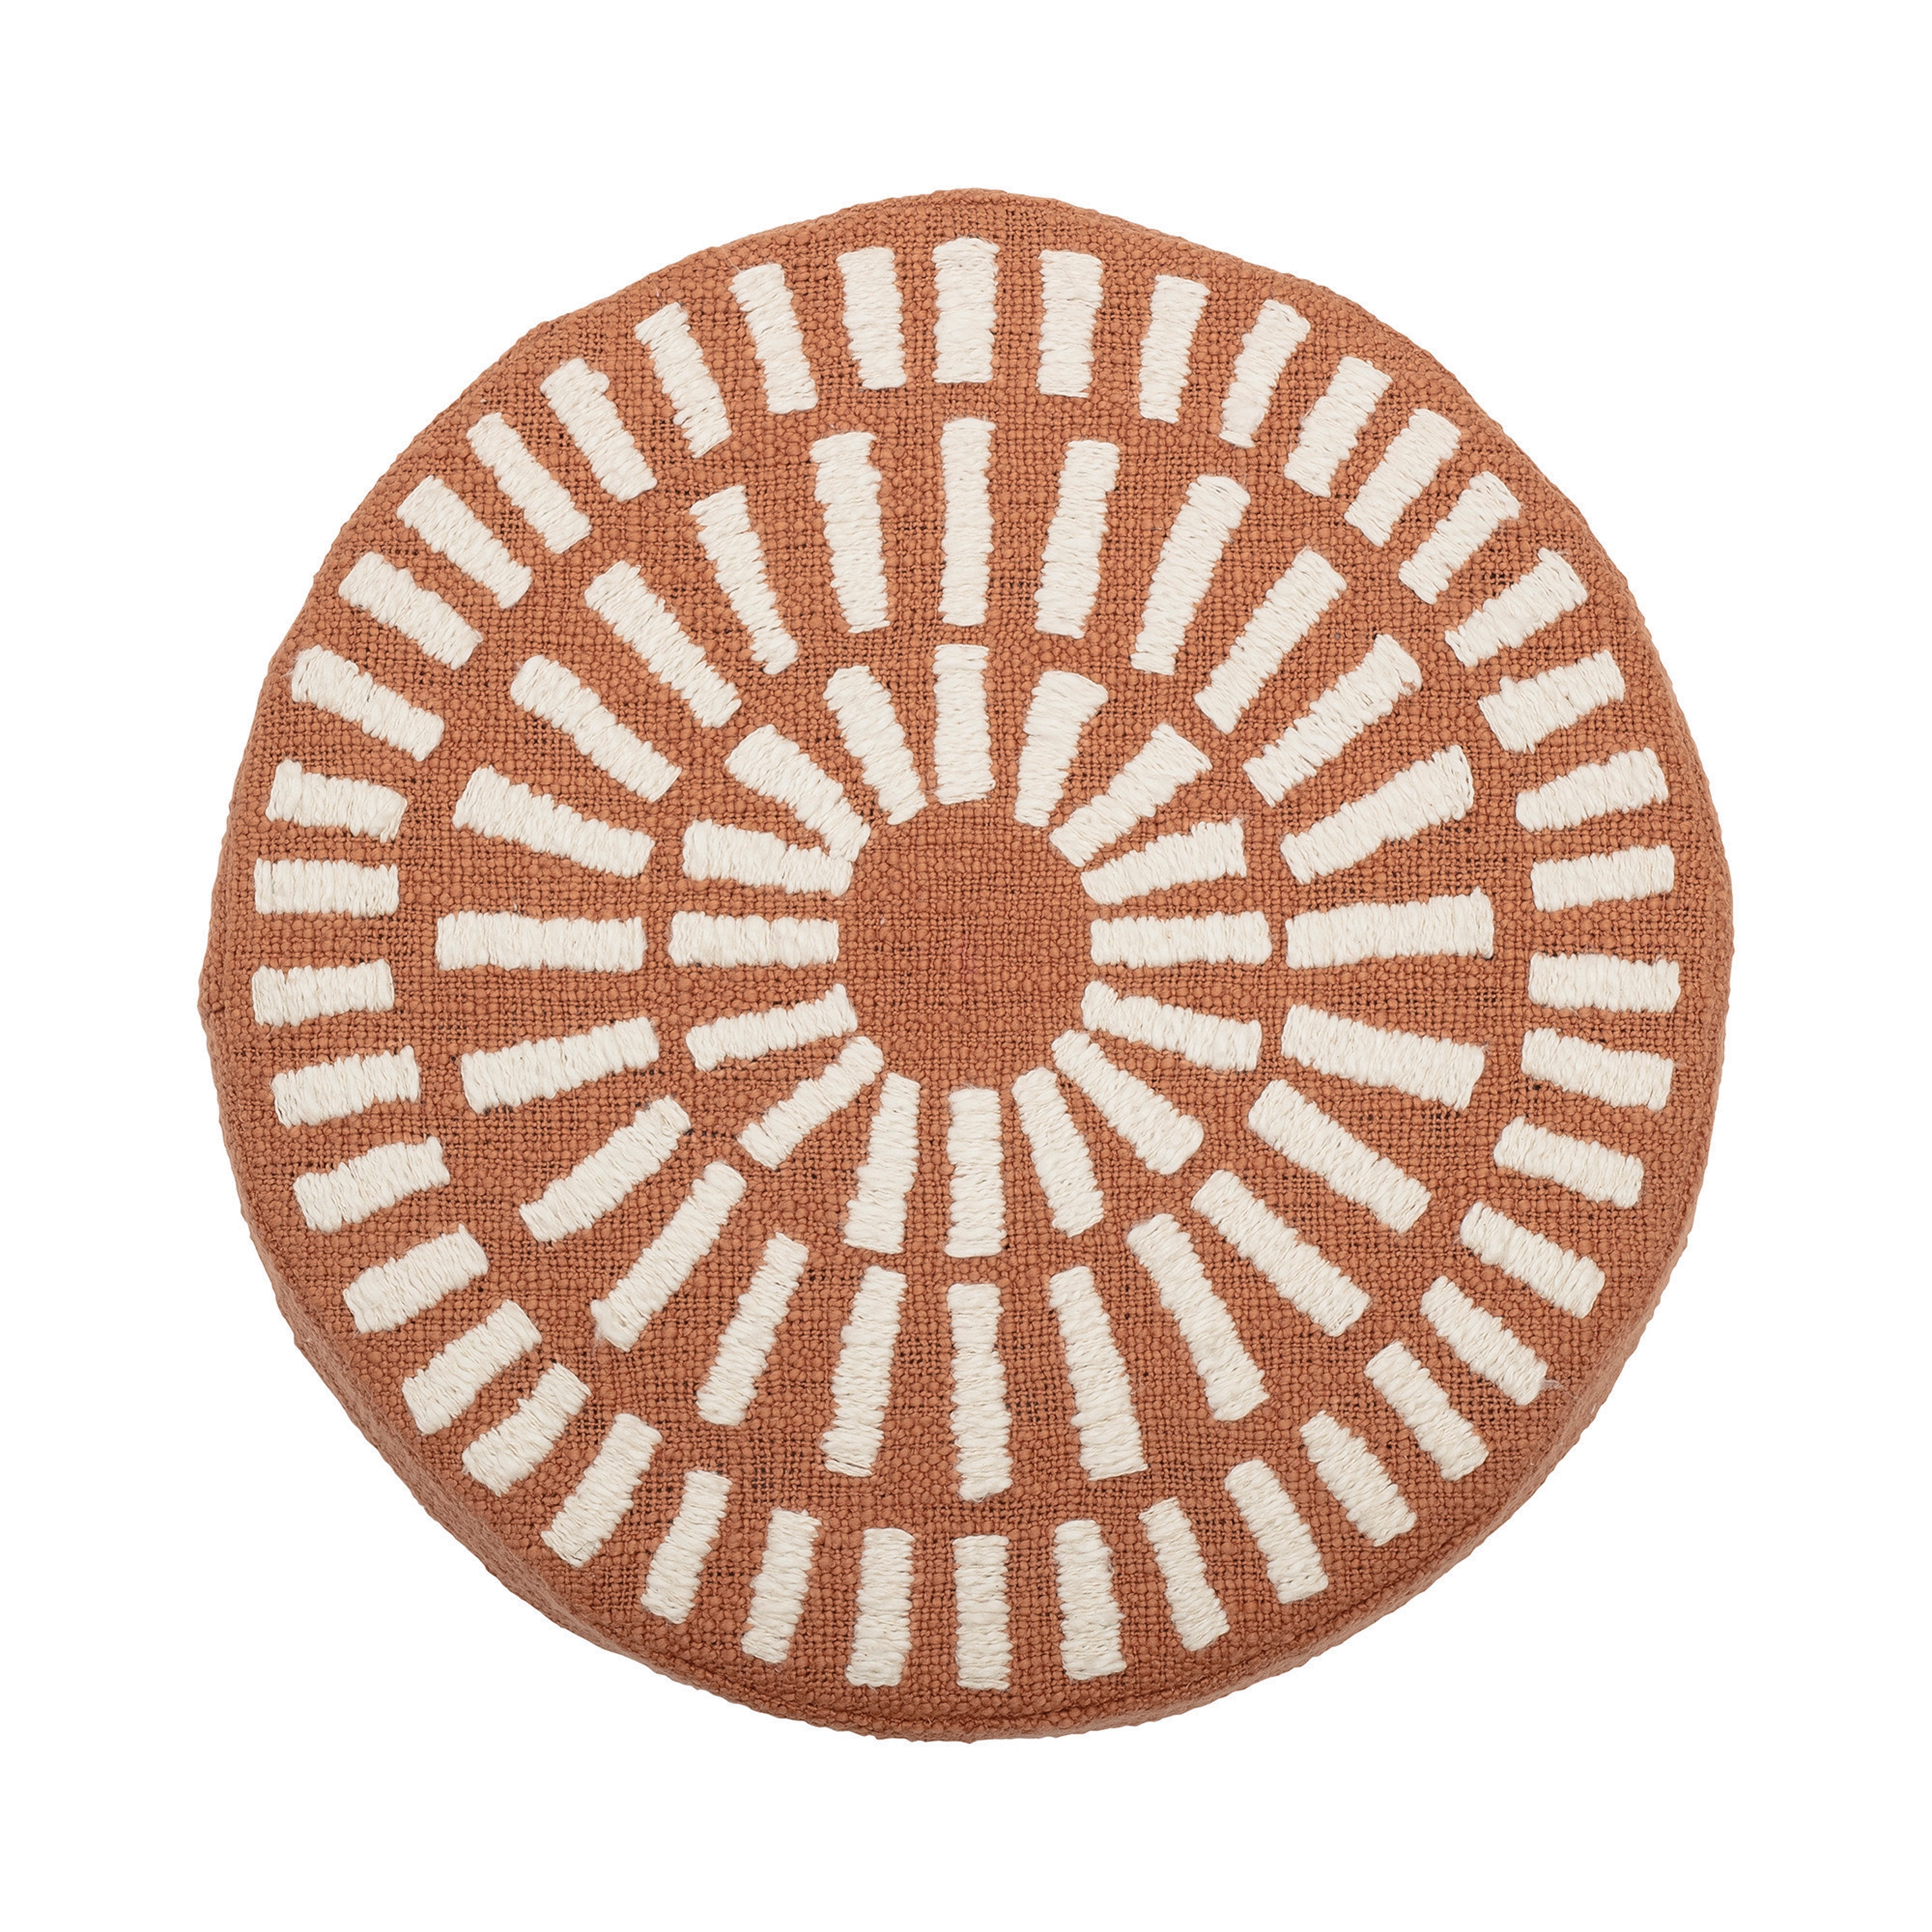 Disk Pillow with Raised Pattern, Burnt Orange & White Cotton, 16" x 16" - Image 0